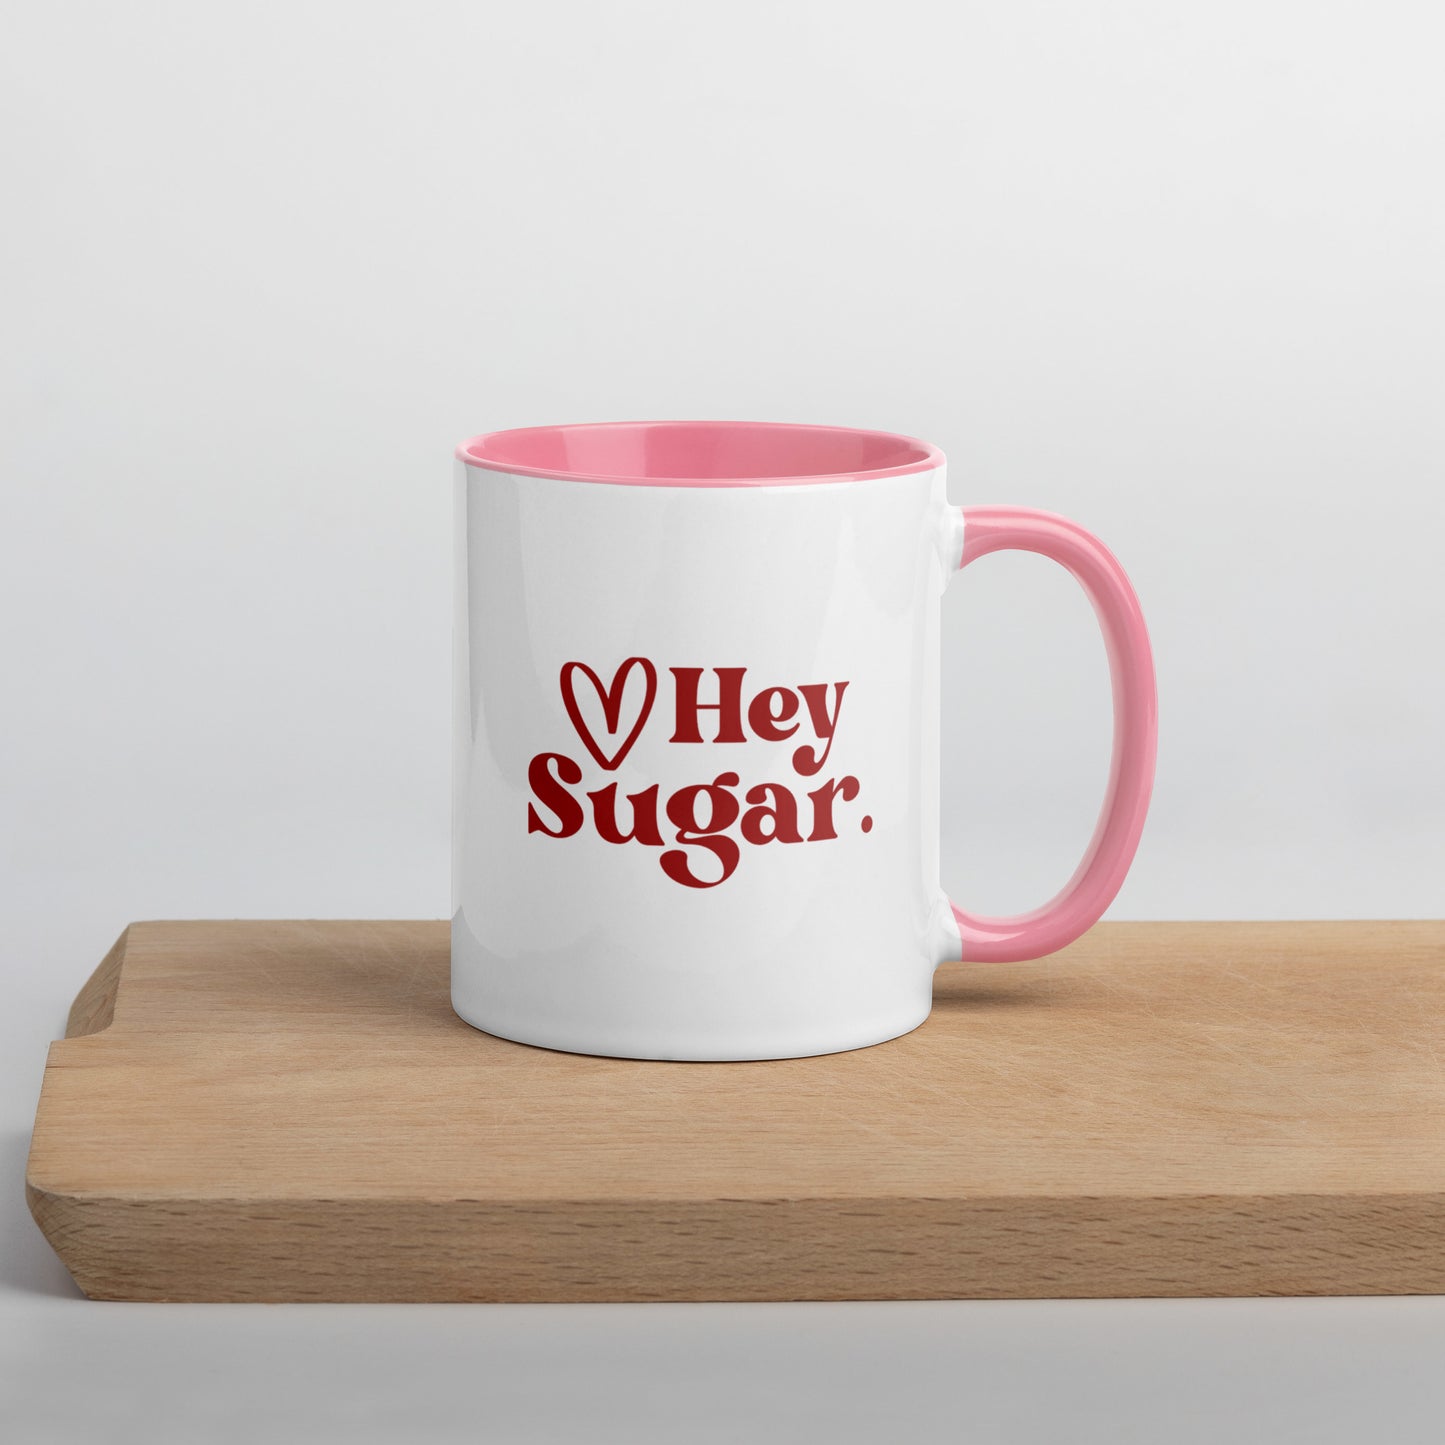 Hey Sugar - Mug with Color Inside